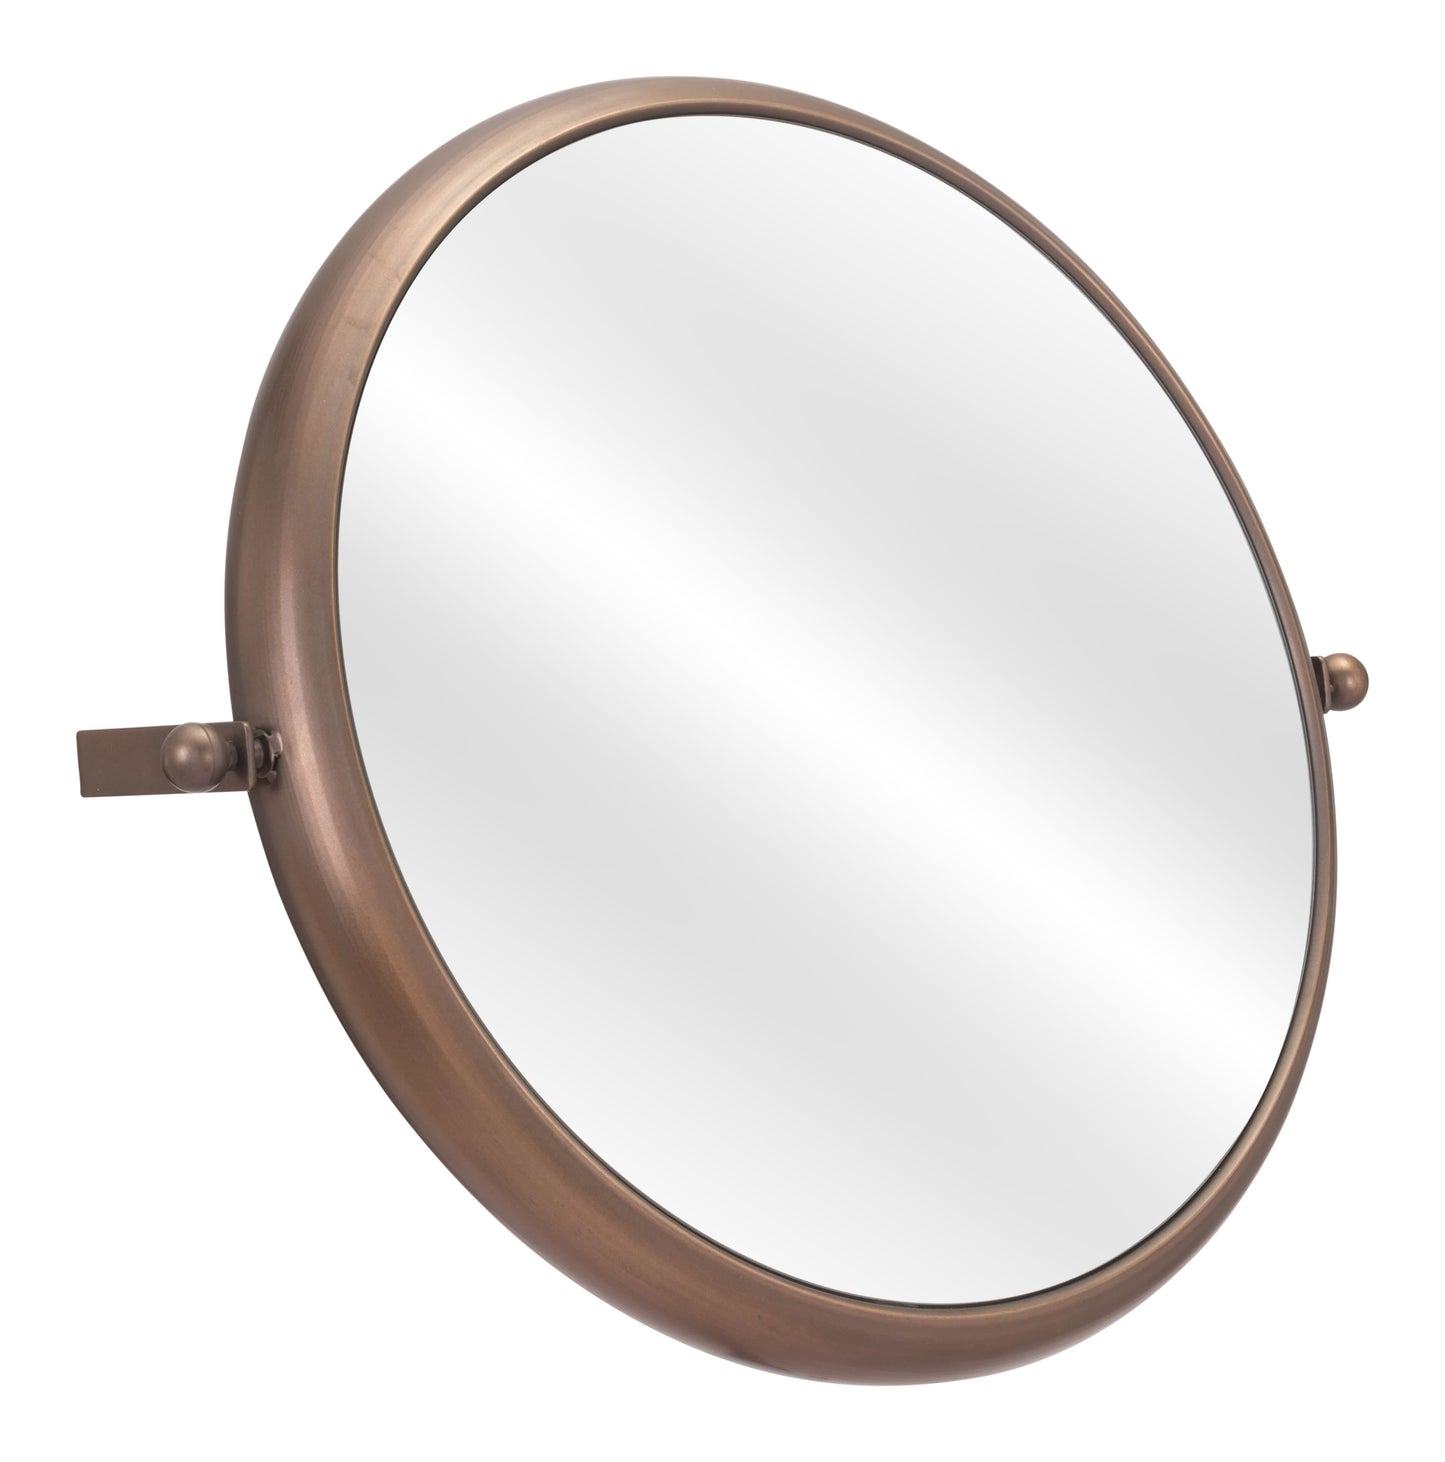 Zuo Rand Mirror (A12233)